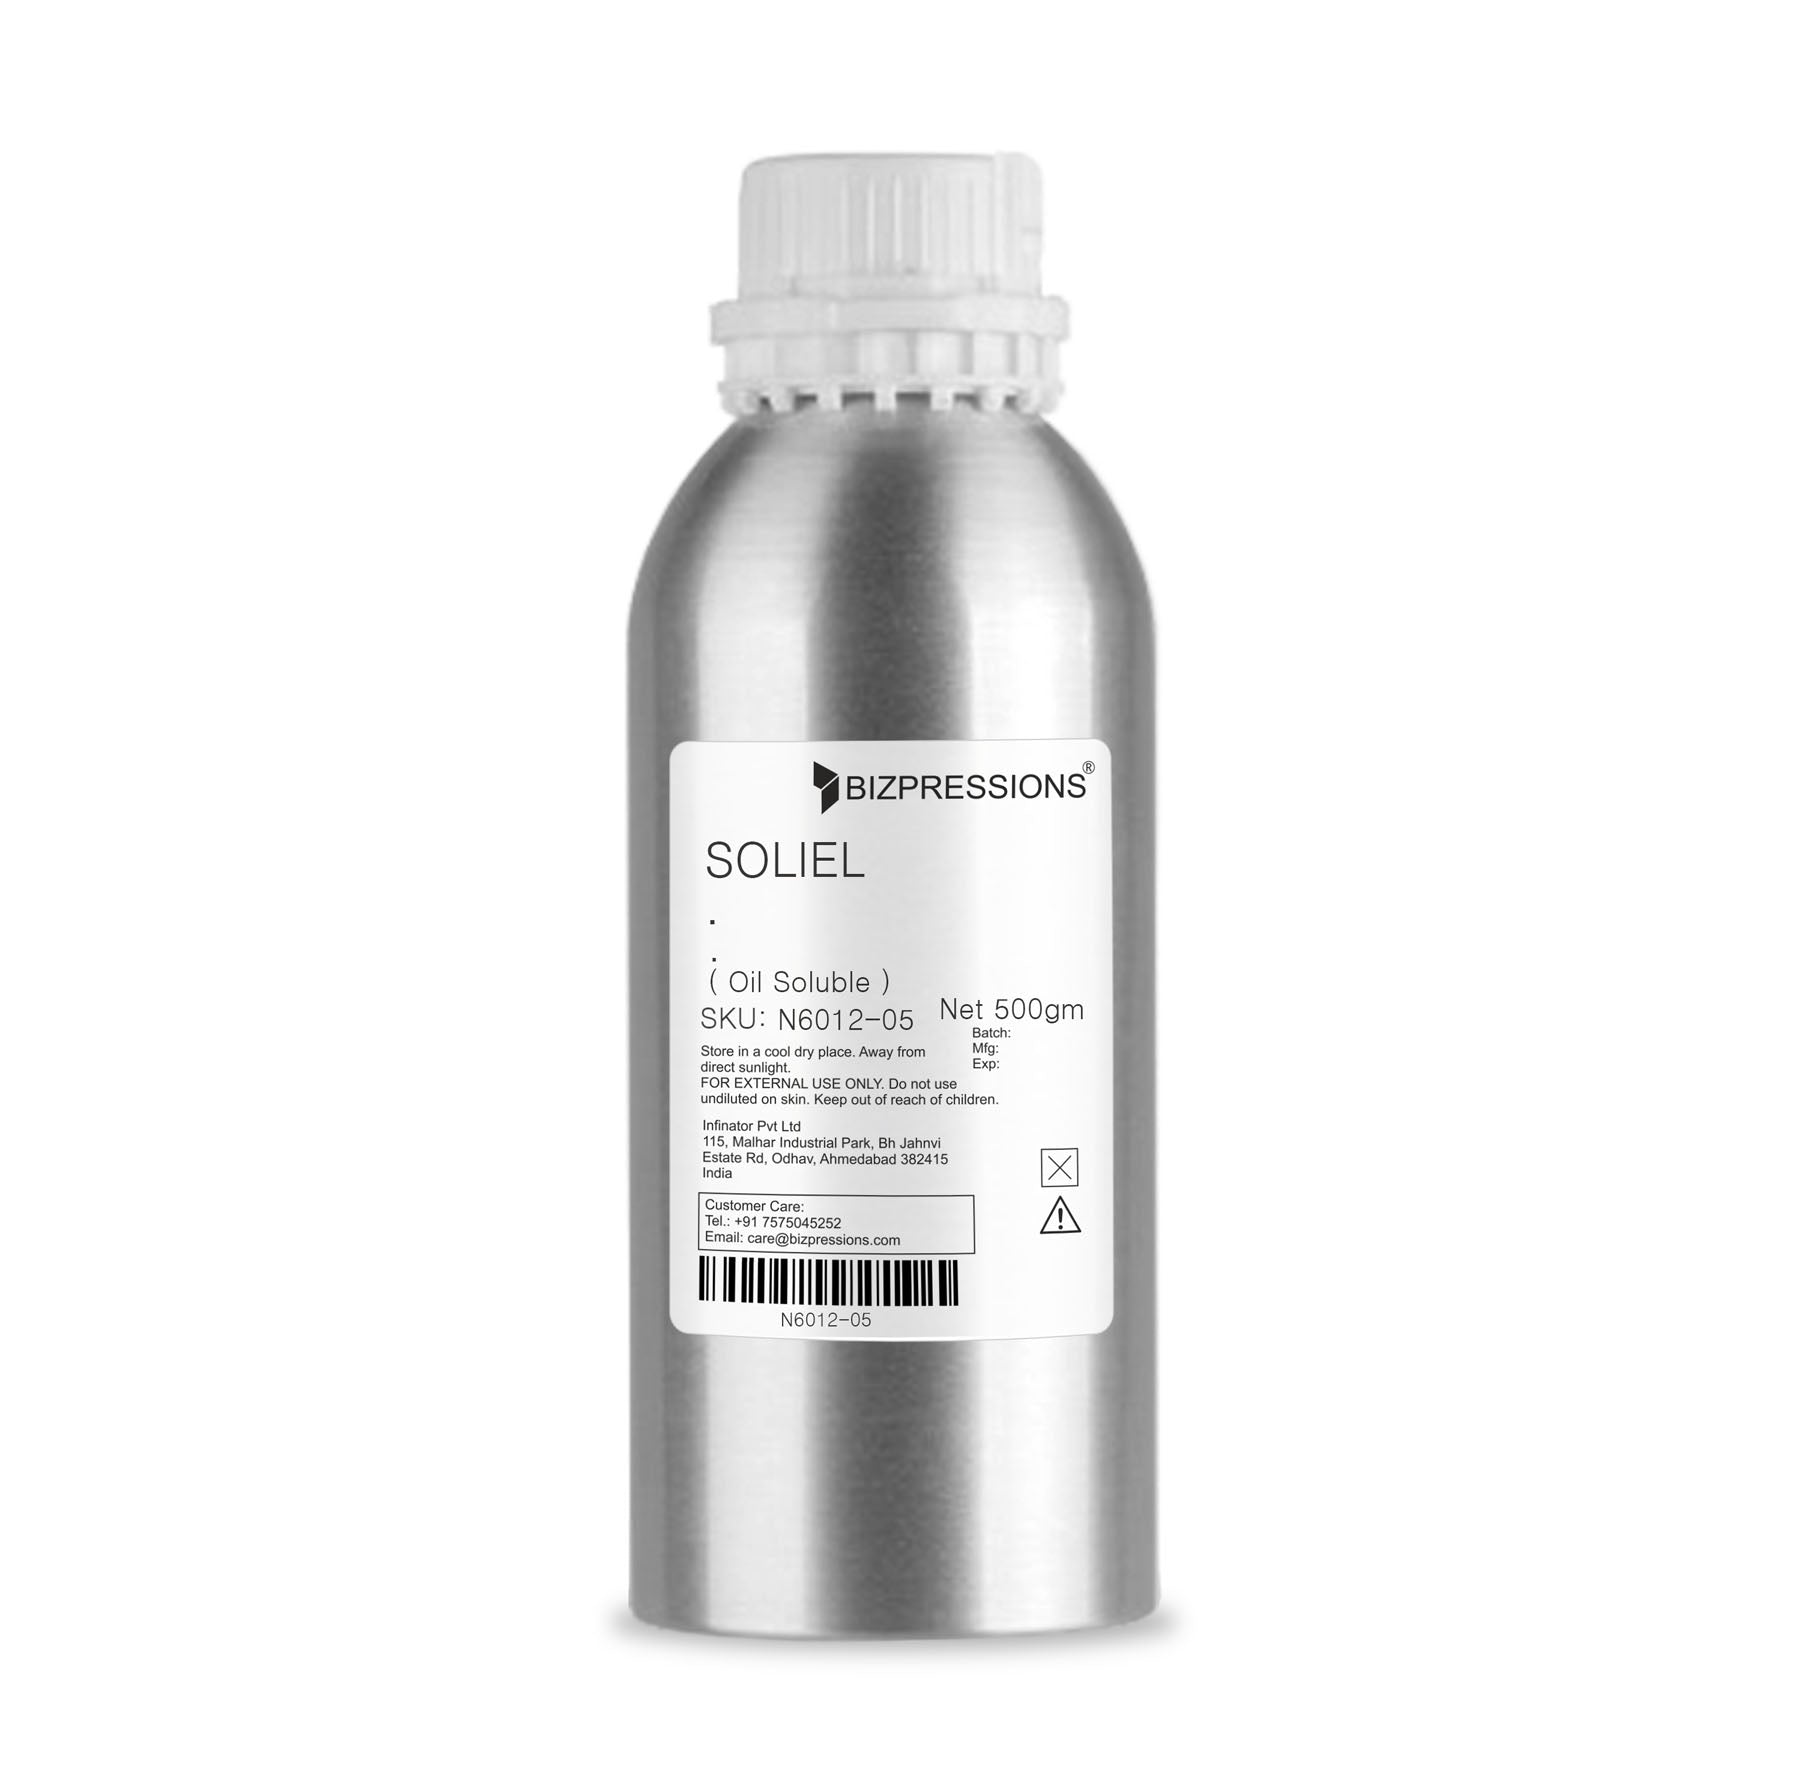 SOLIEL - Fragrance ( Oil Soluble ) - 500 gm